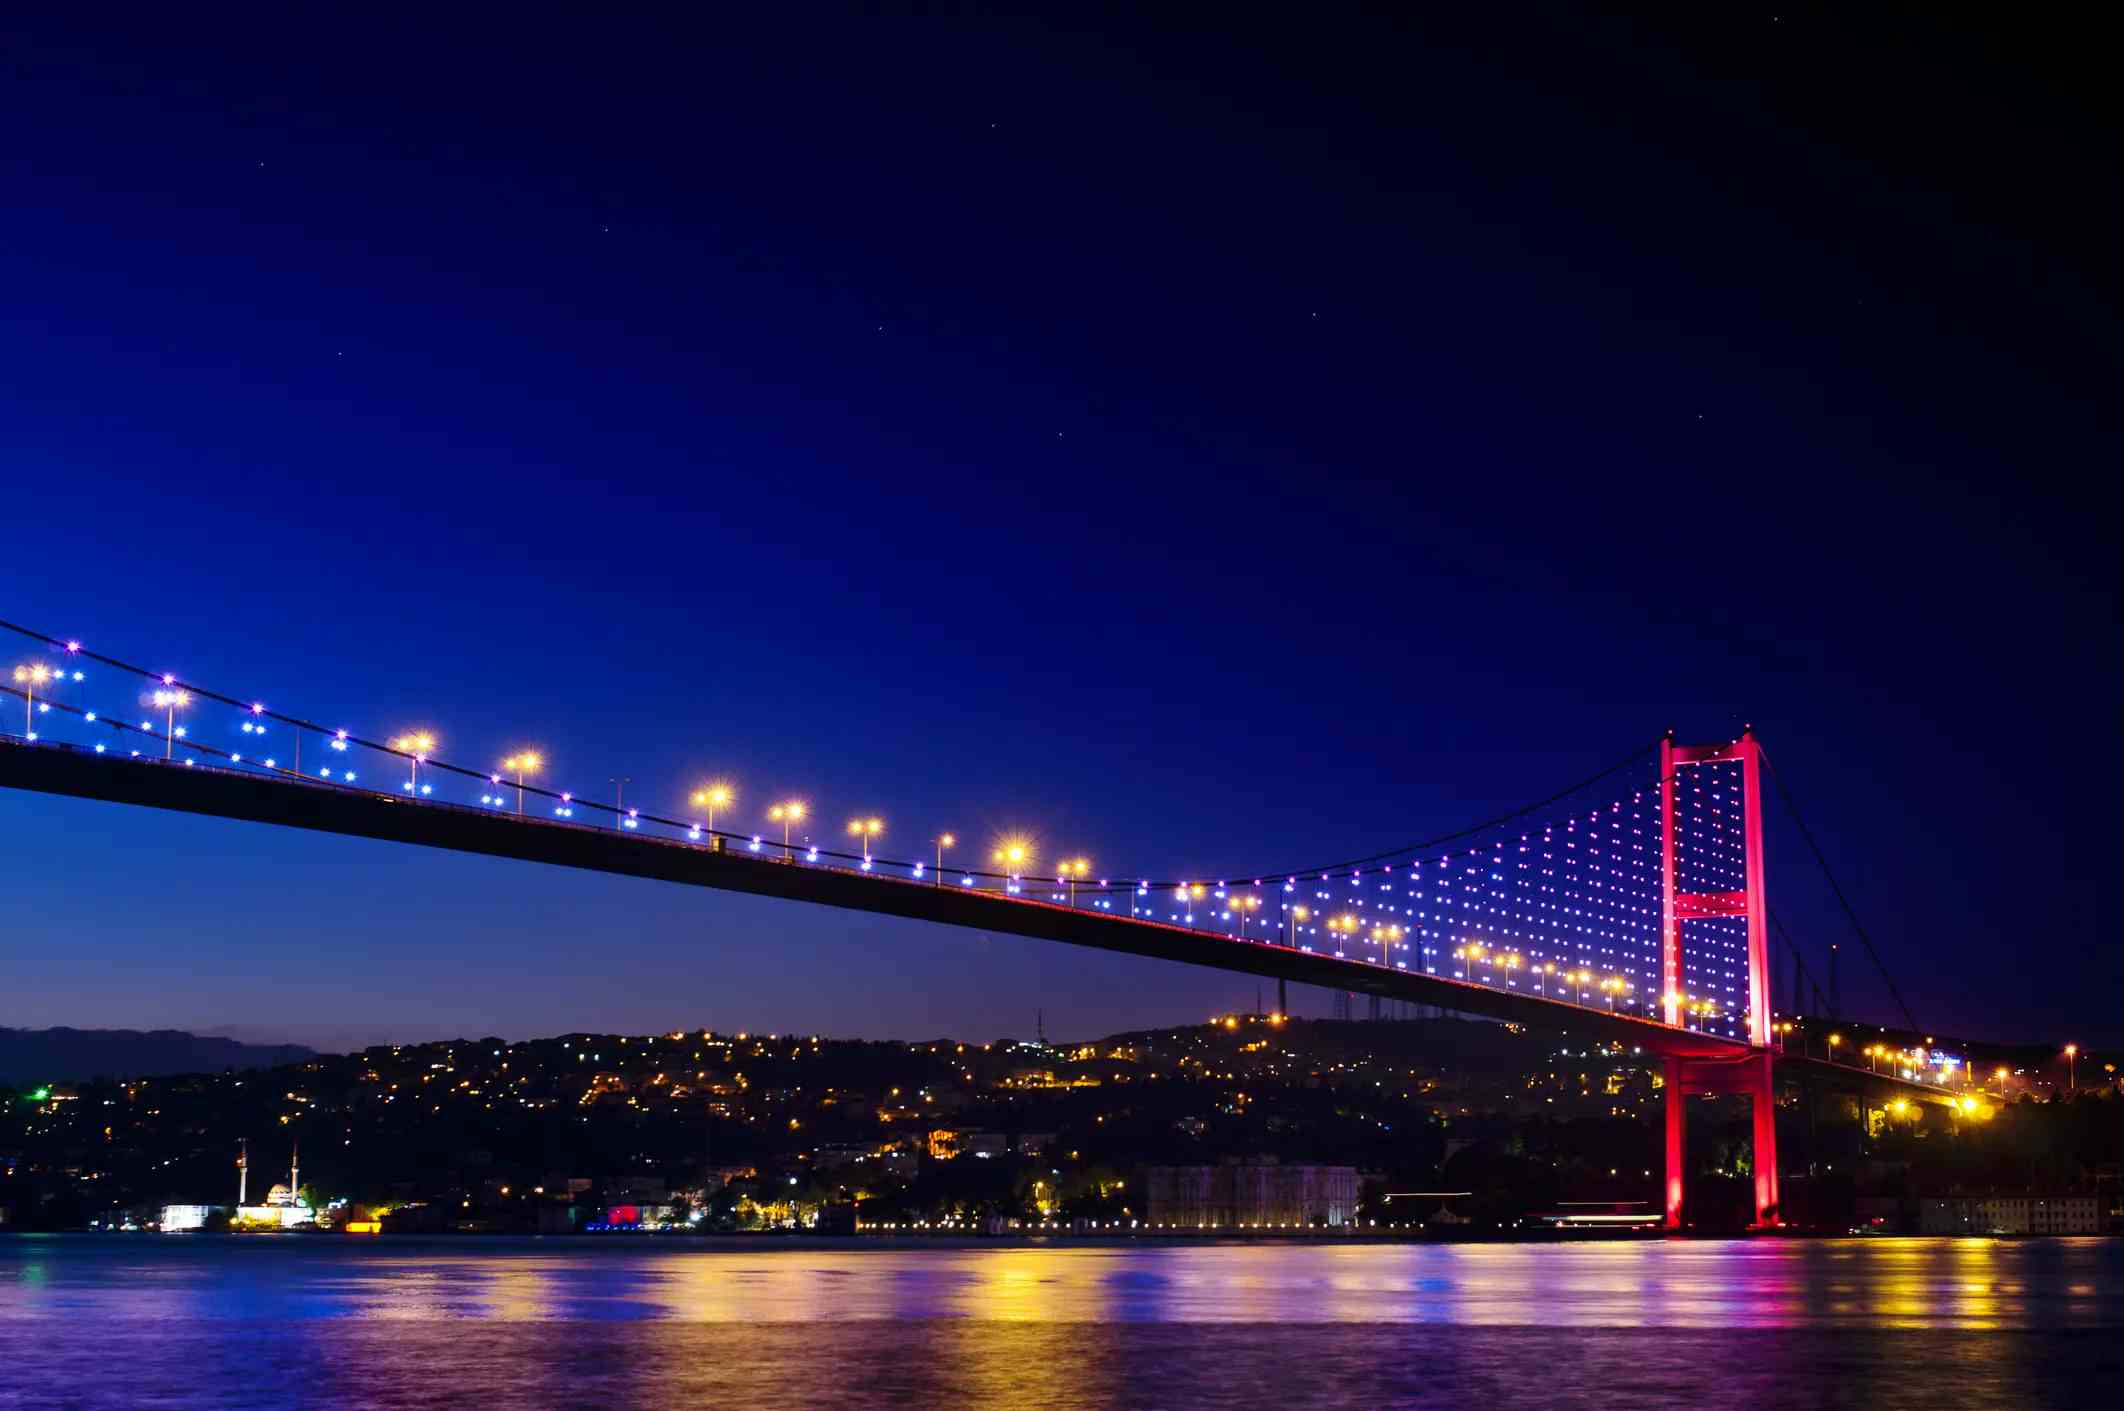 Bosphorus image